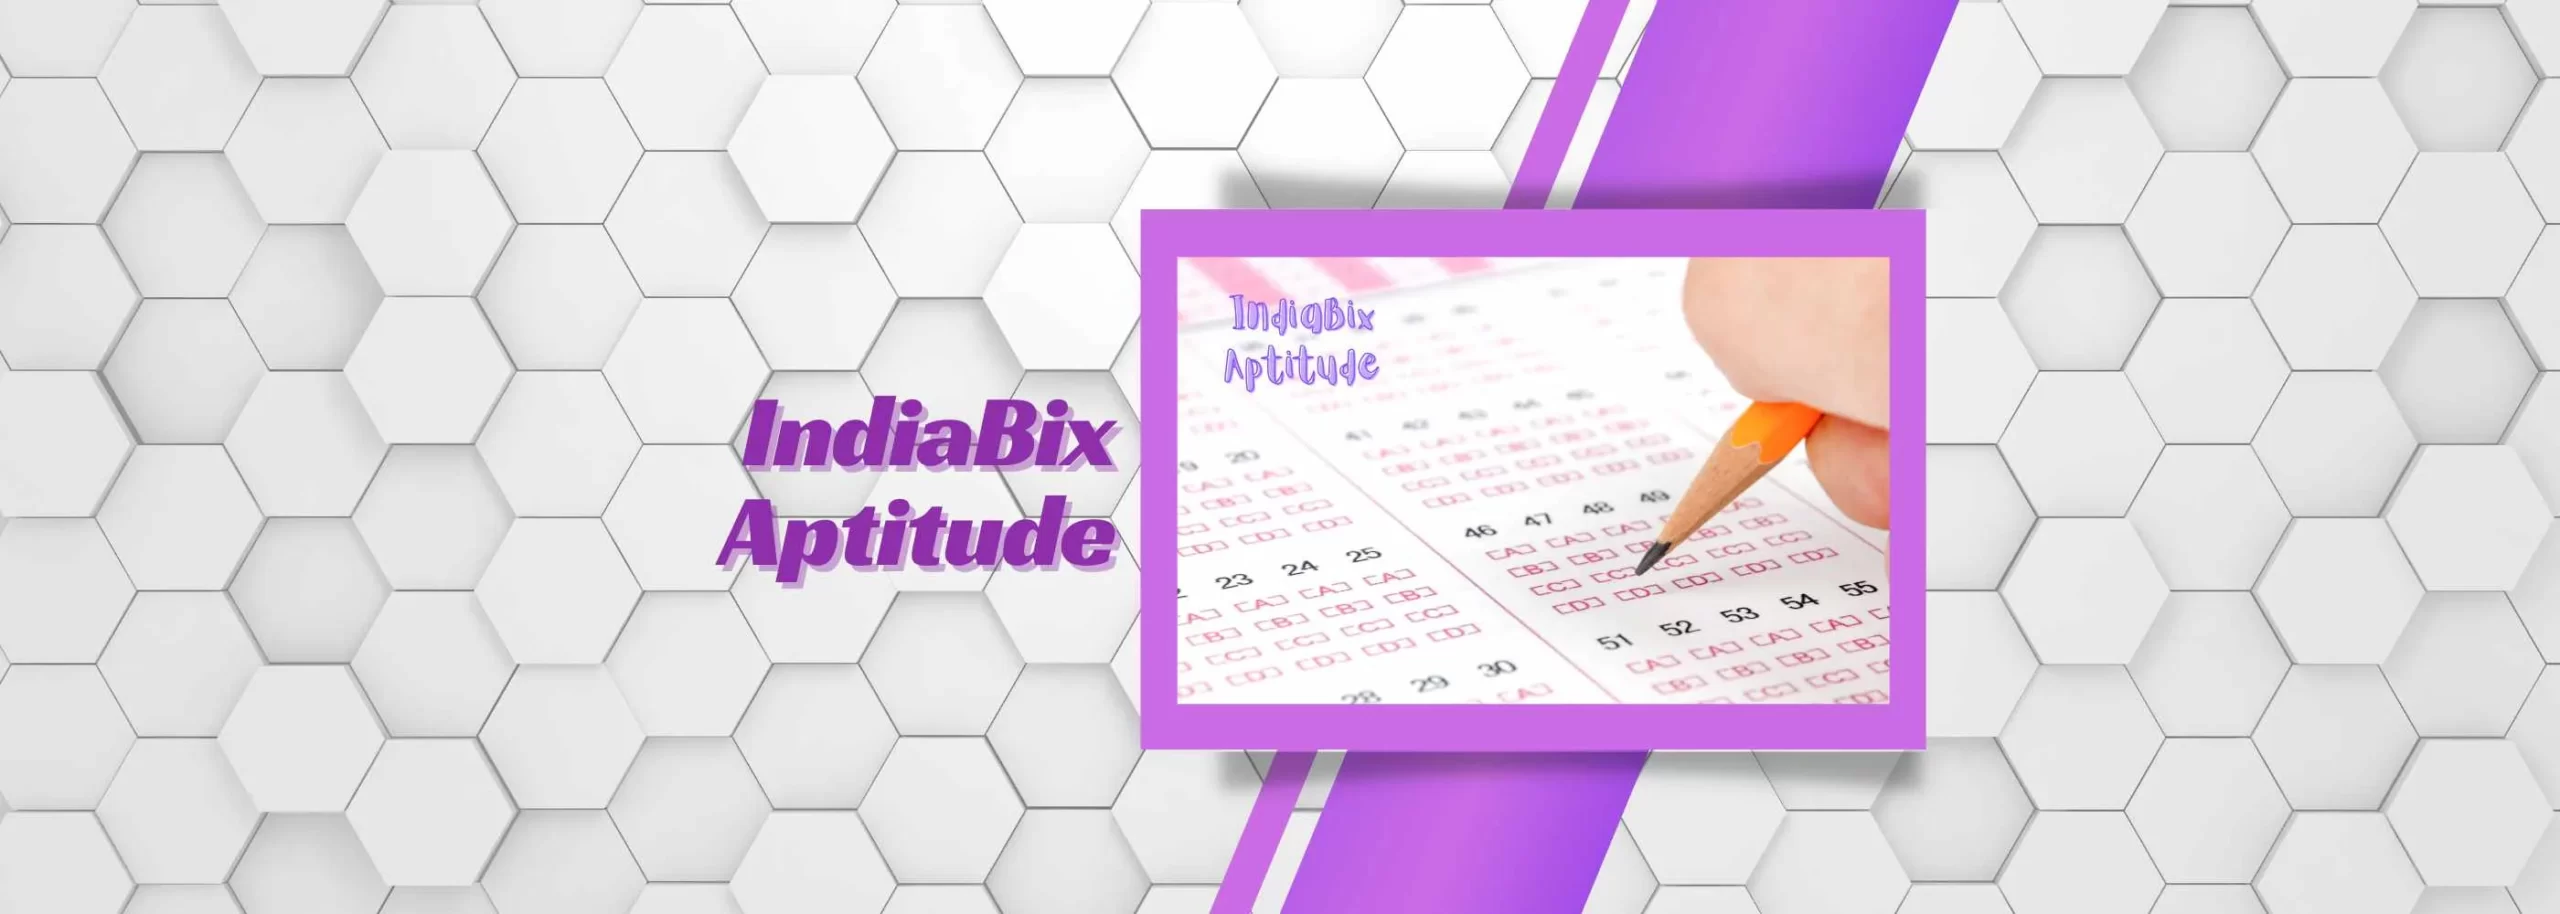 How Can You Improve Your Indiabix Aptitude DataTrained